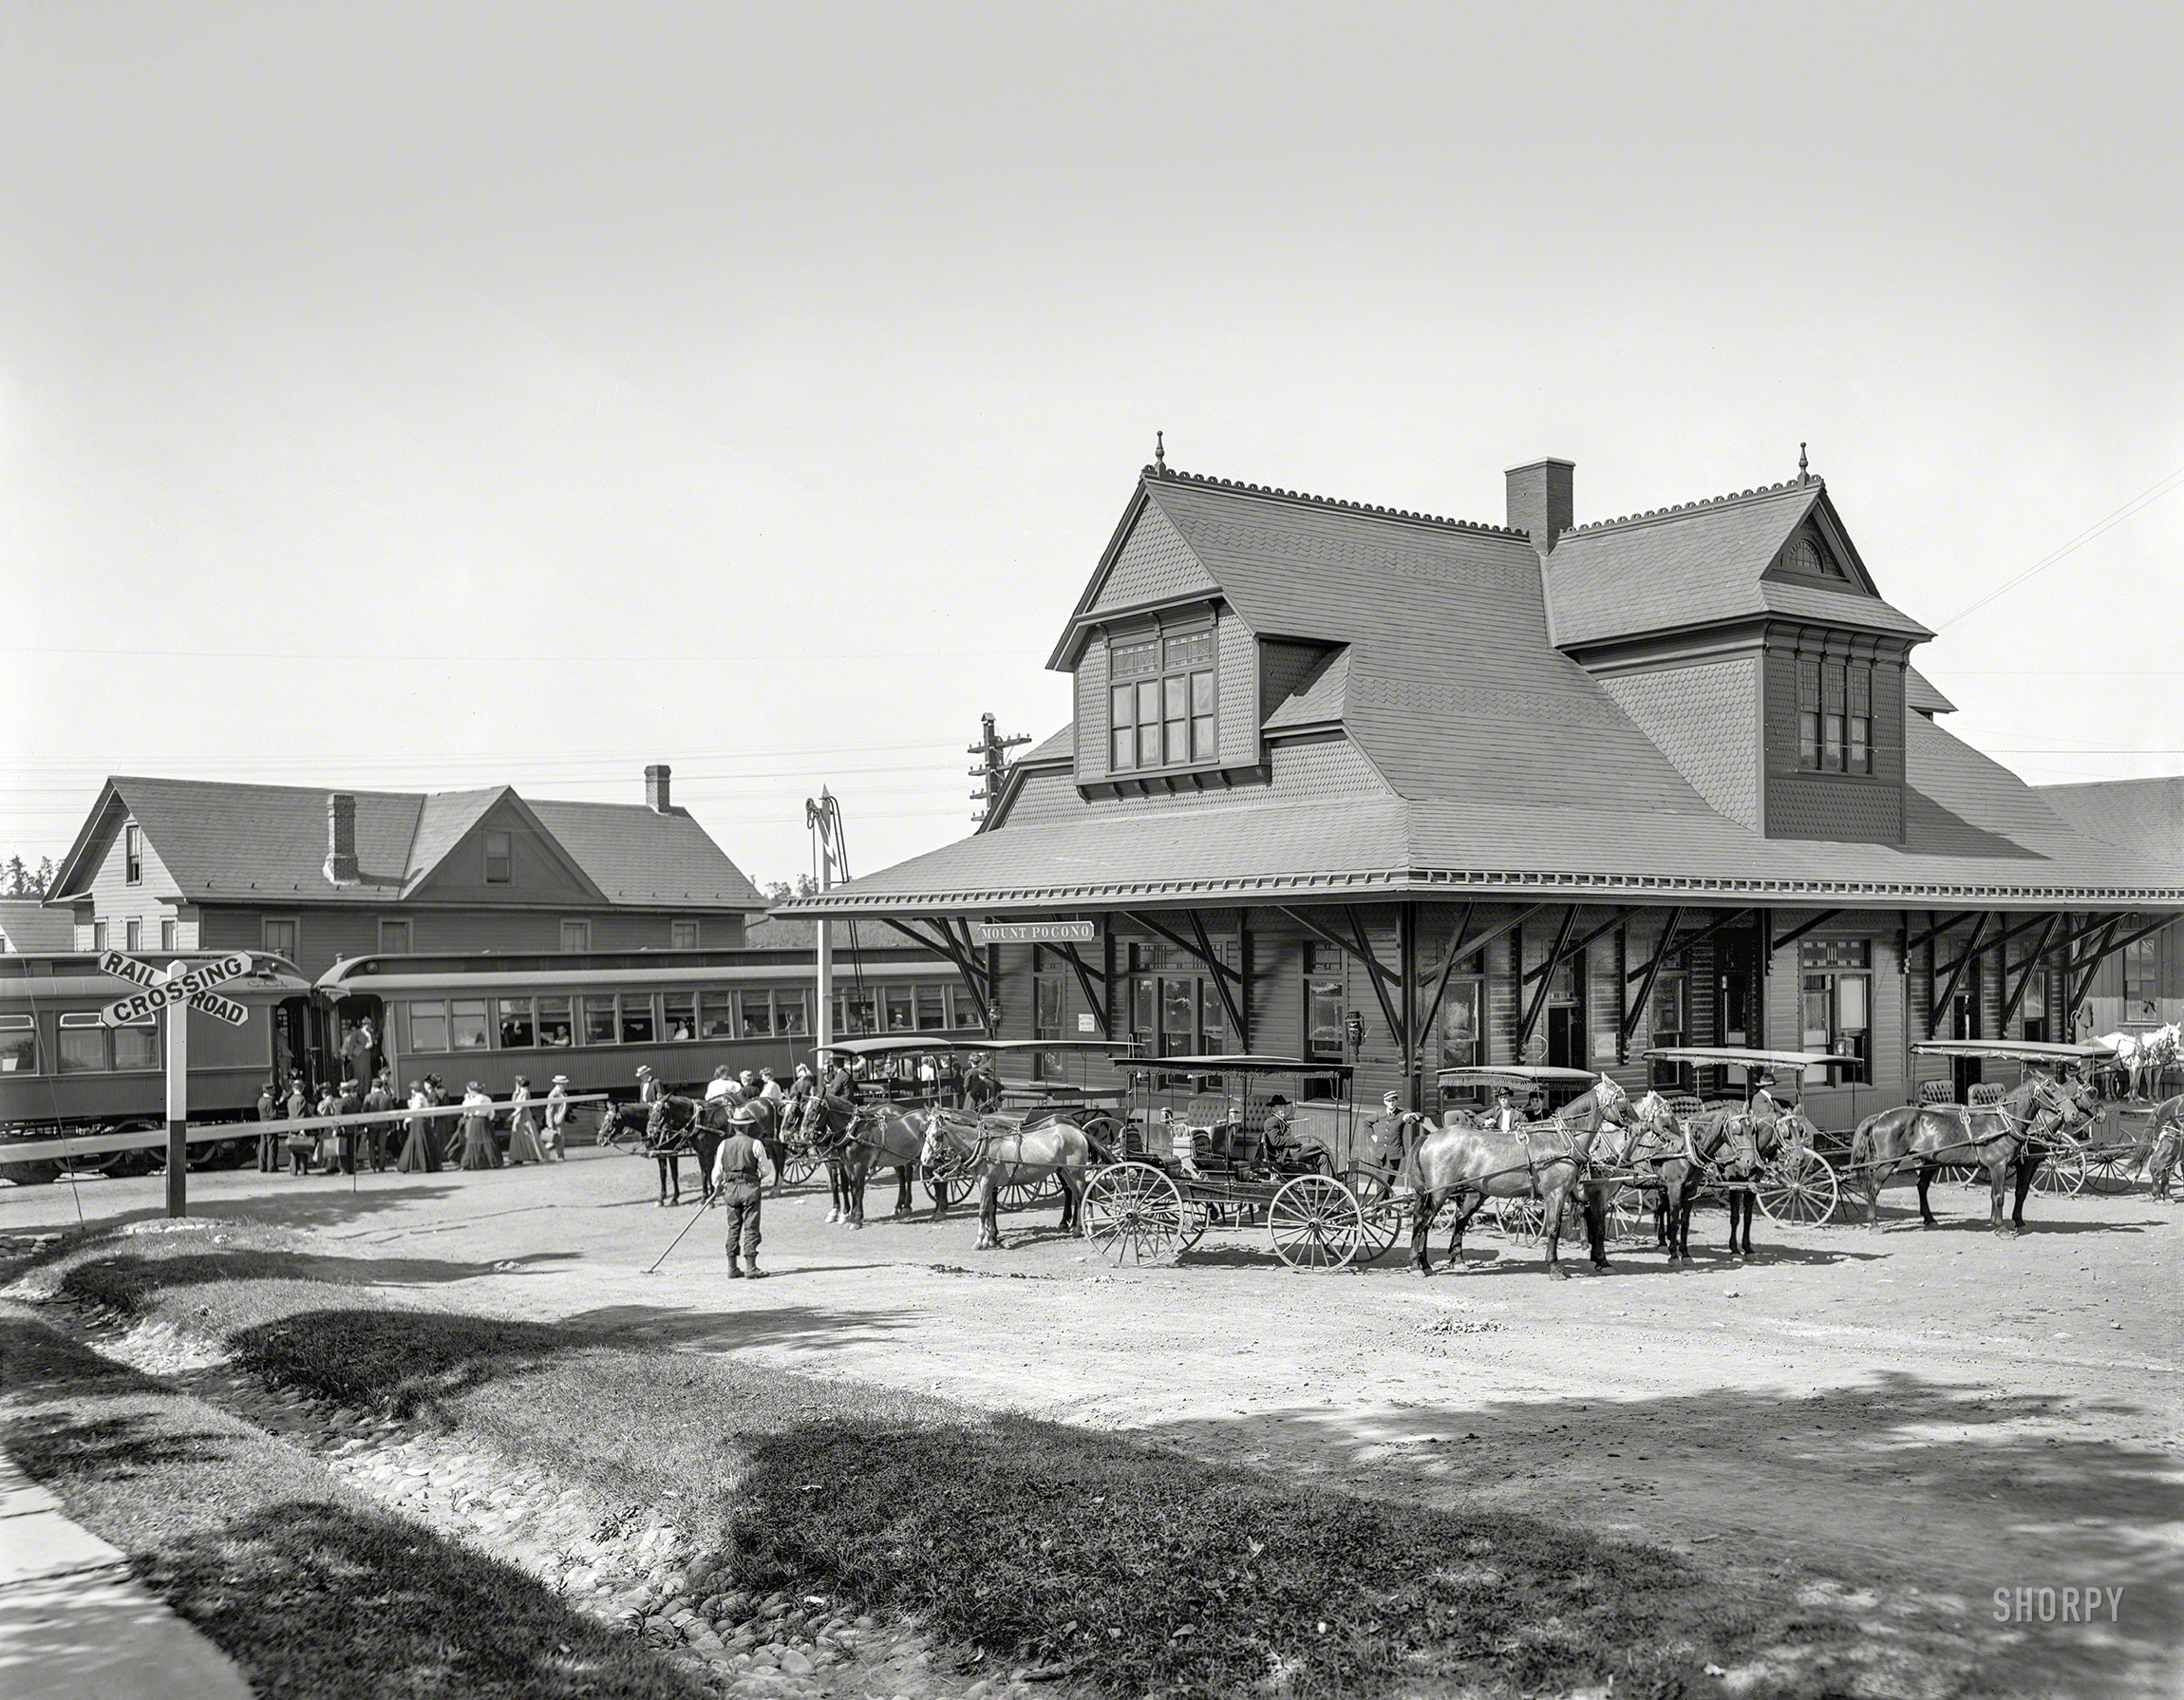 1905. "Lackawanna Railway station, Mount Pocono, Pennsylvania." 8x10 inch dry plate glass negative, Detroit Publishing Company. View full size.